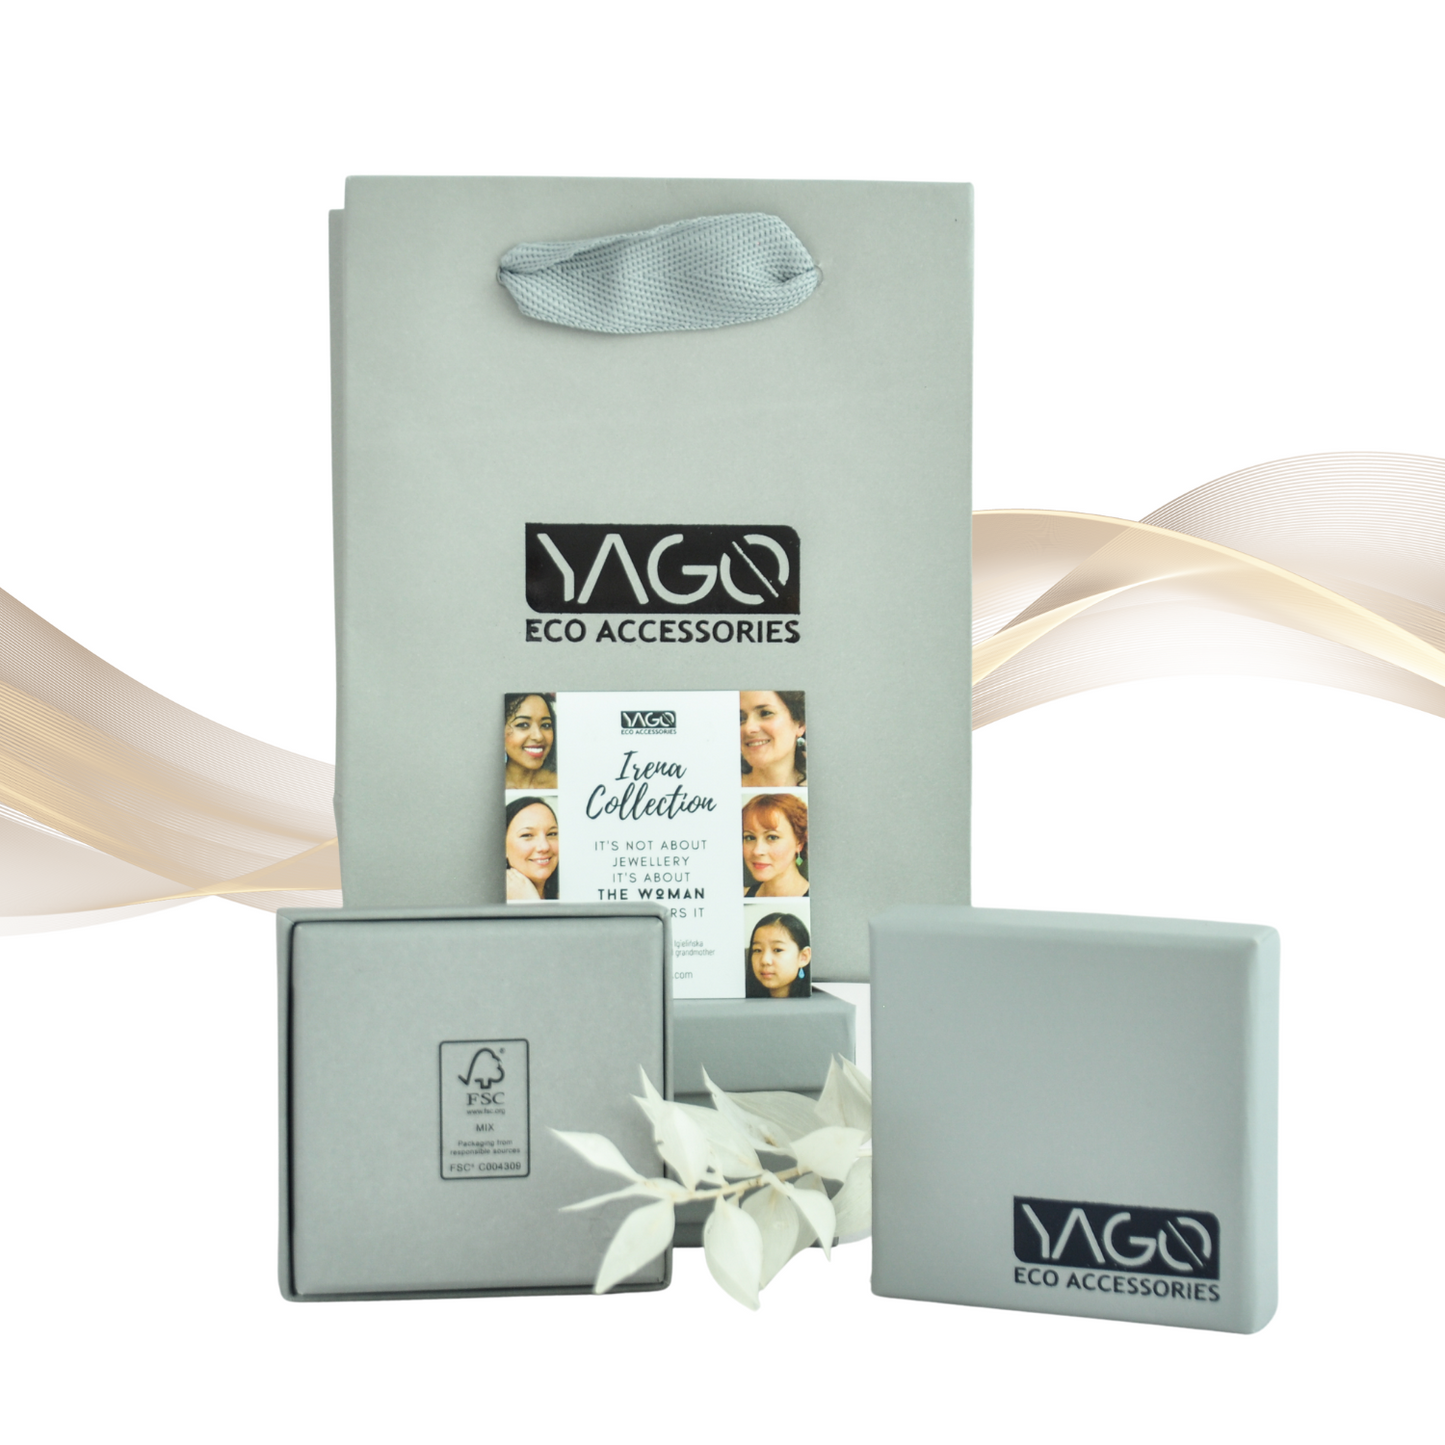 YagoEco Sustainable Brand Handmade in London